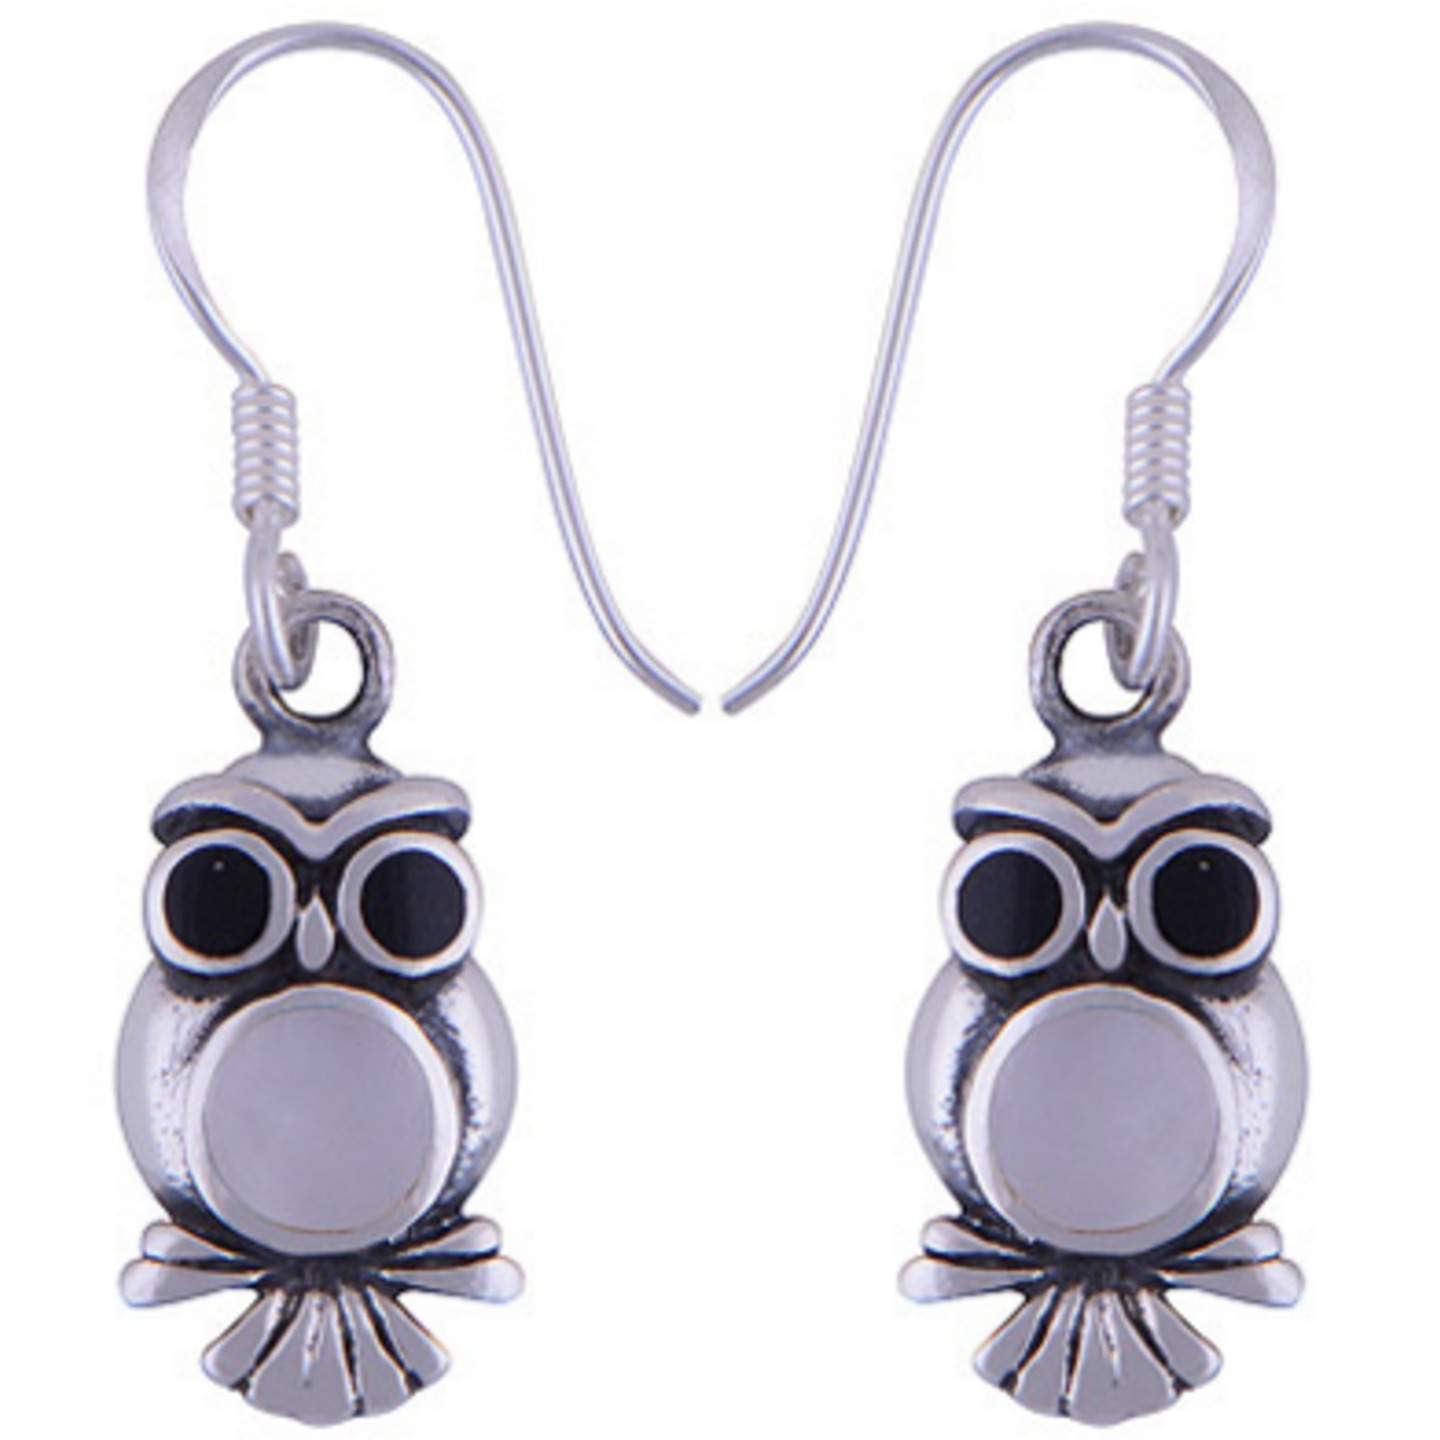 The YinYang Owl Silver Earring